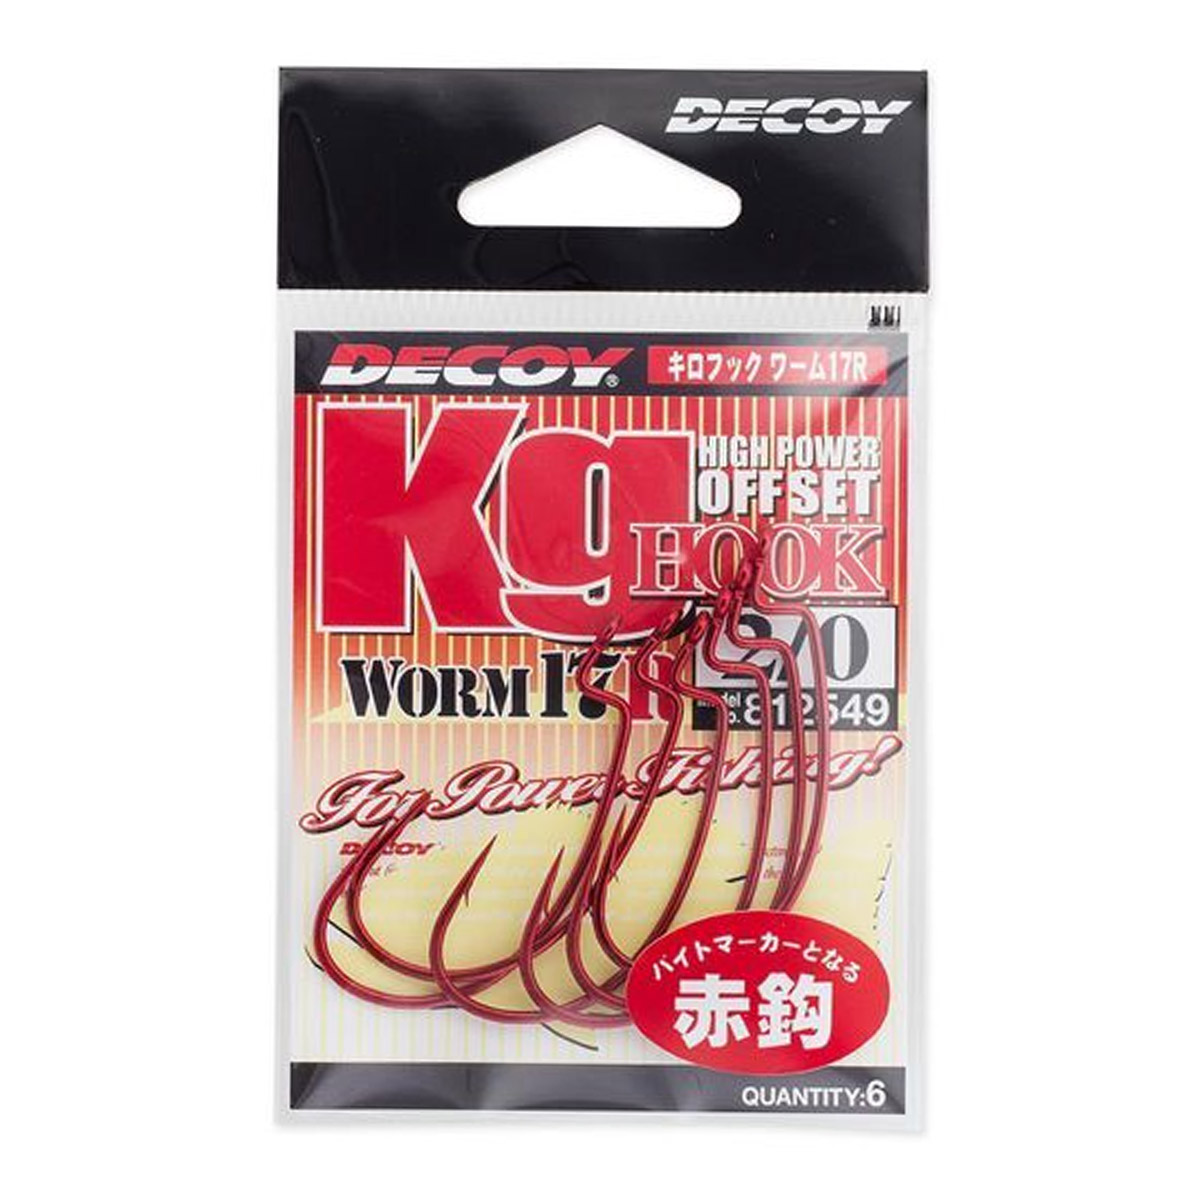 Decoy KG High Power Offset Hook Worm 17 Red